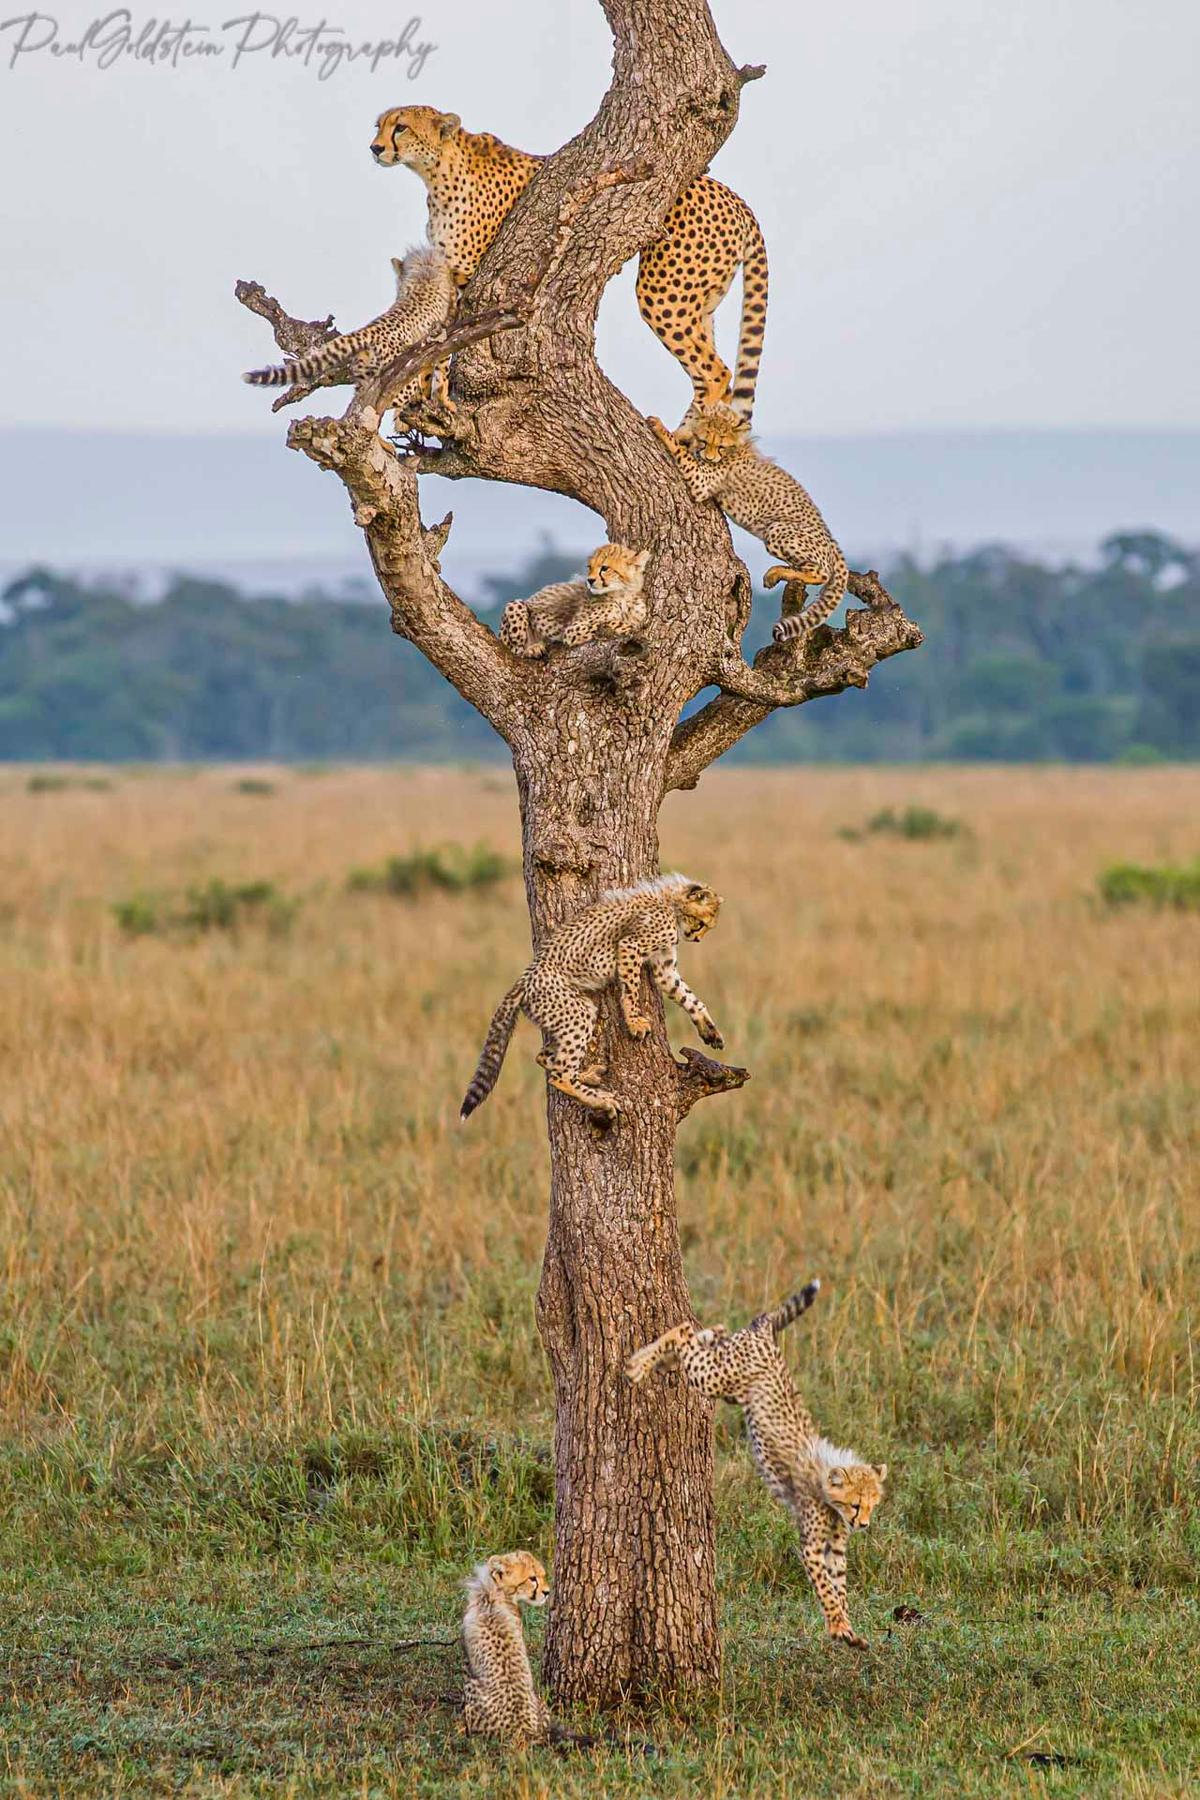 Mara reserve cheetah family. (Courtesy of <a href="https://www.instagram.com/paulsgoldstein/">Paul Goldstein</a>)